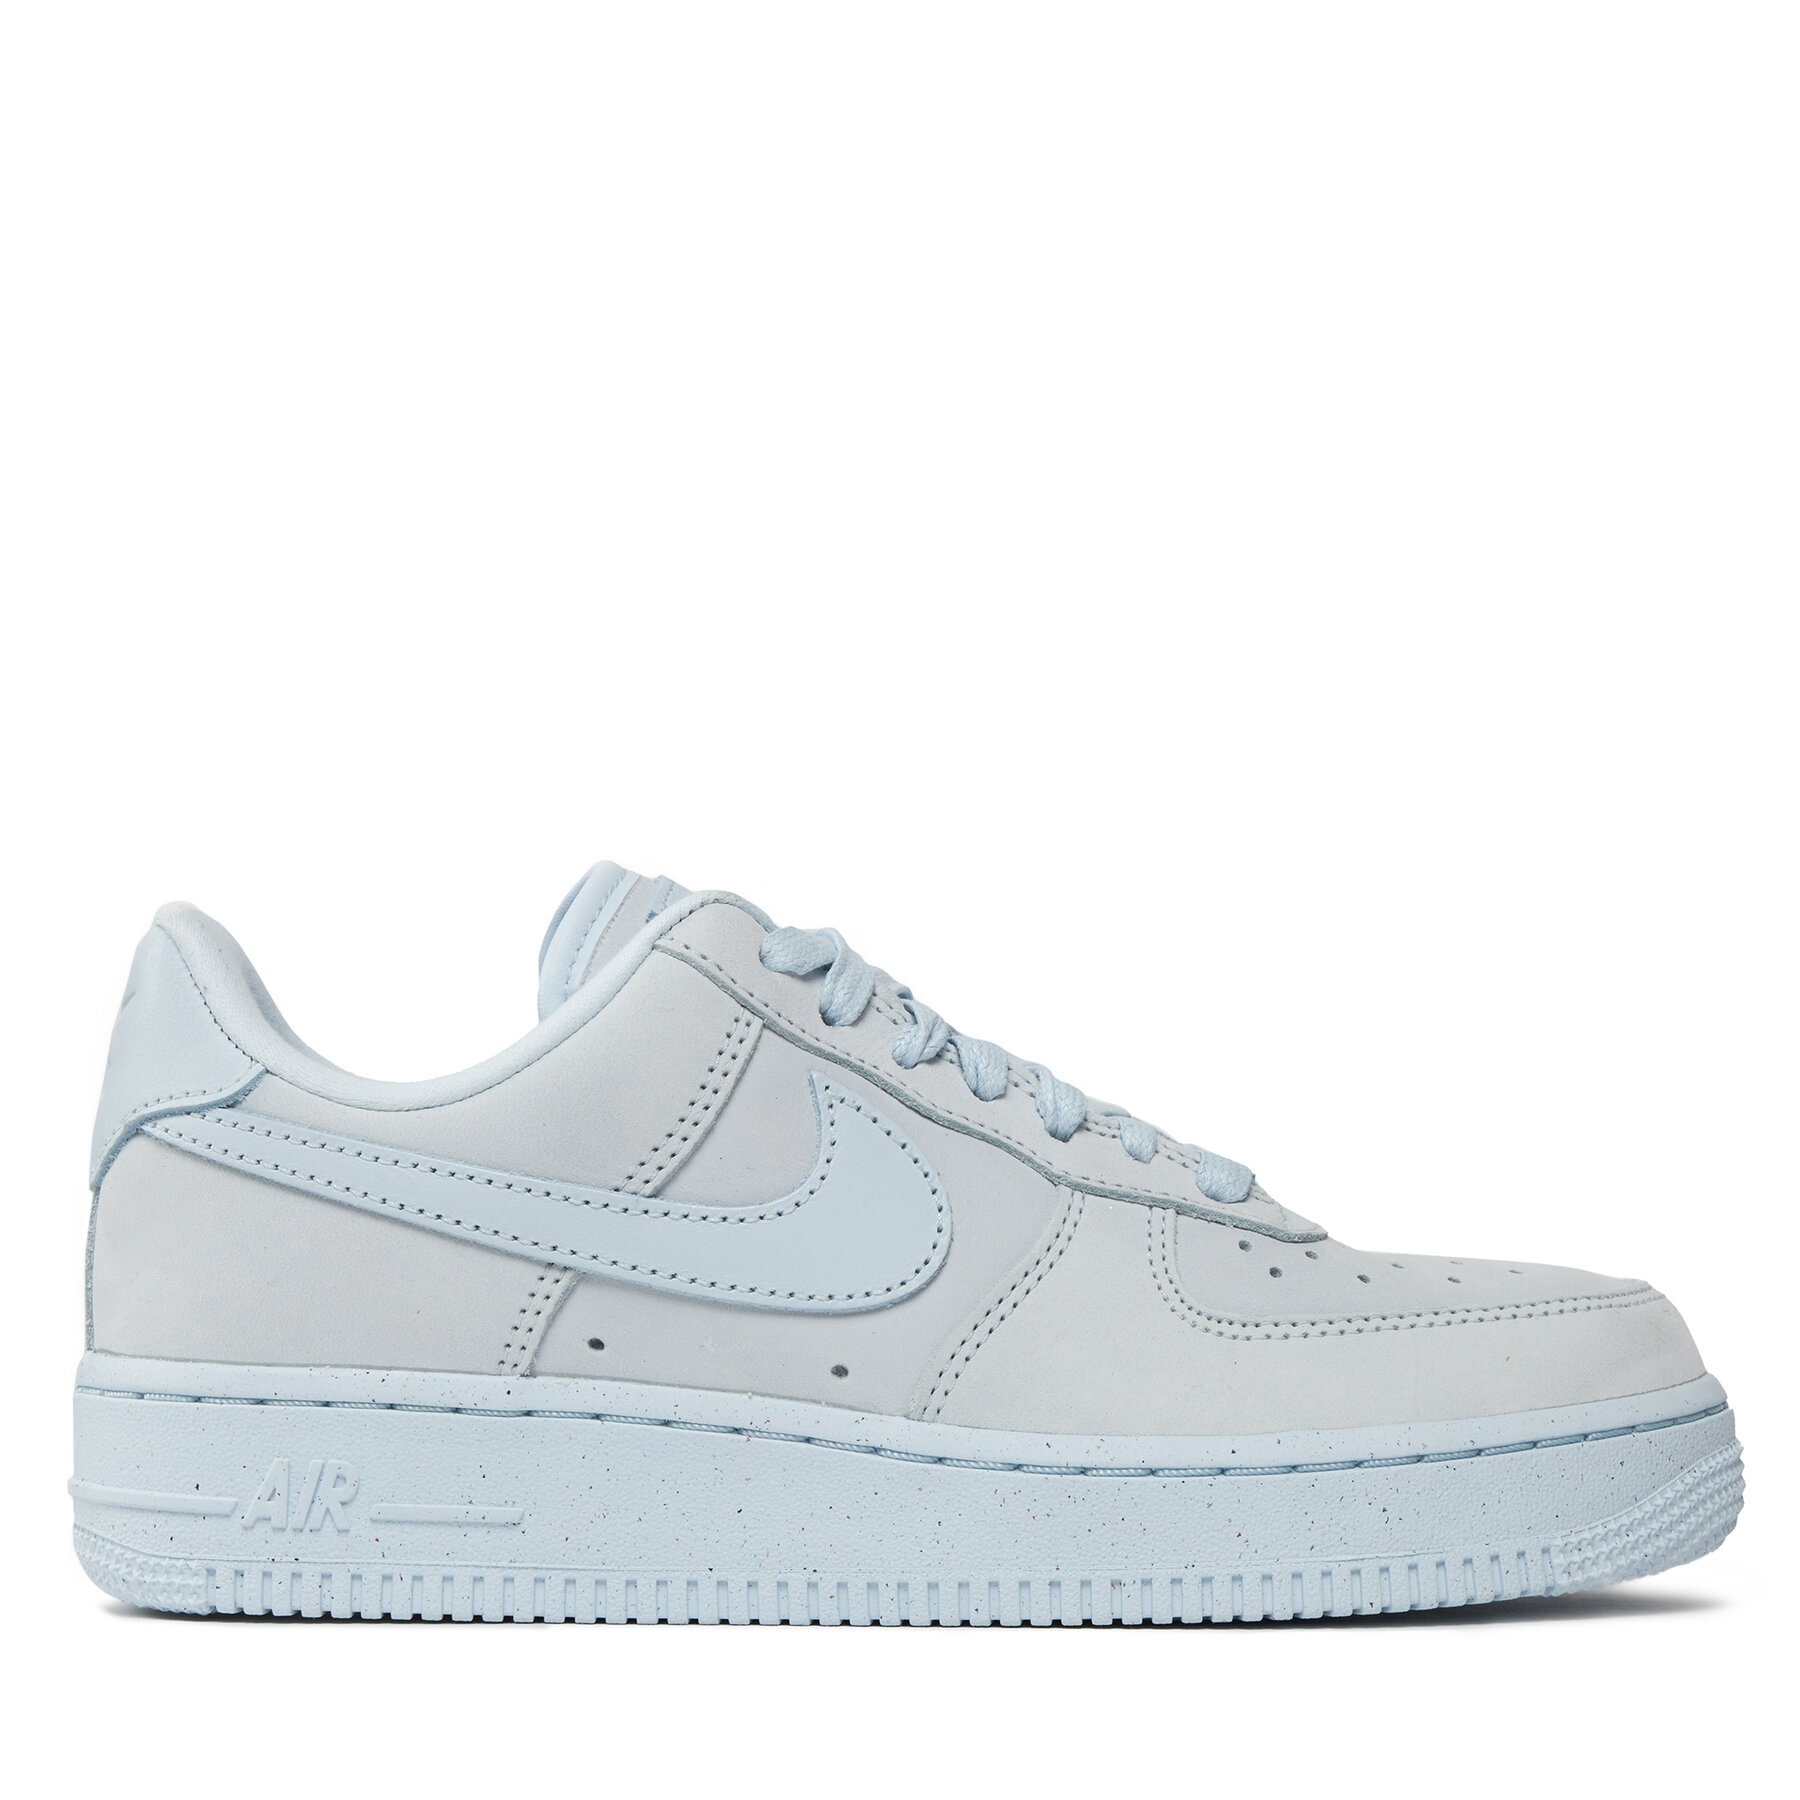 Nike Air Force 1 '07 Low Premium Women white/blue tint - Sneakers